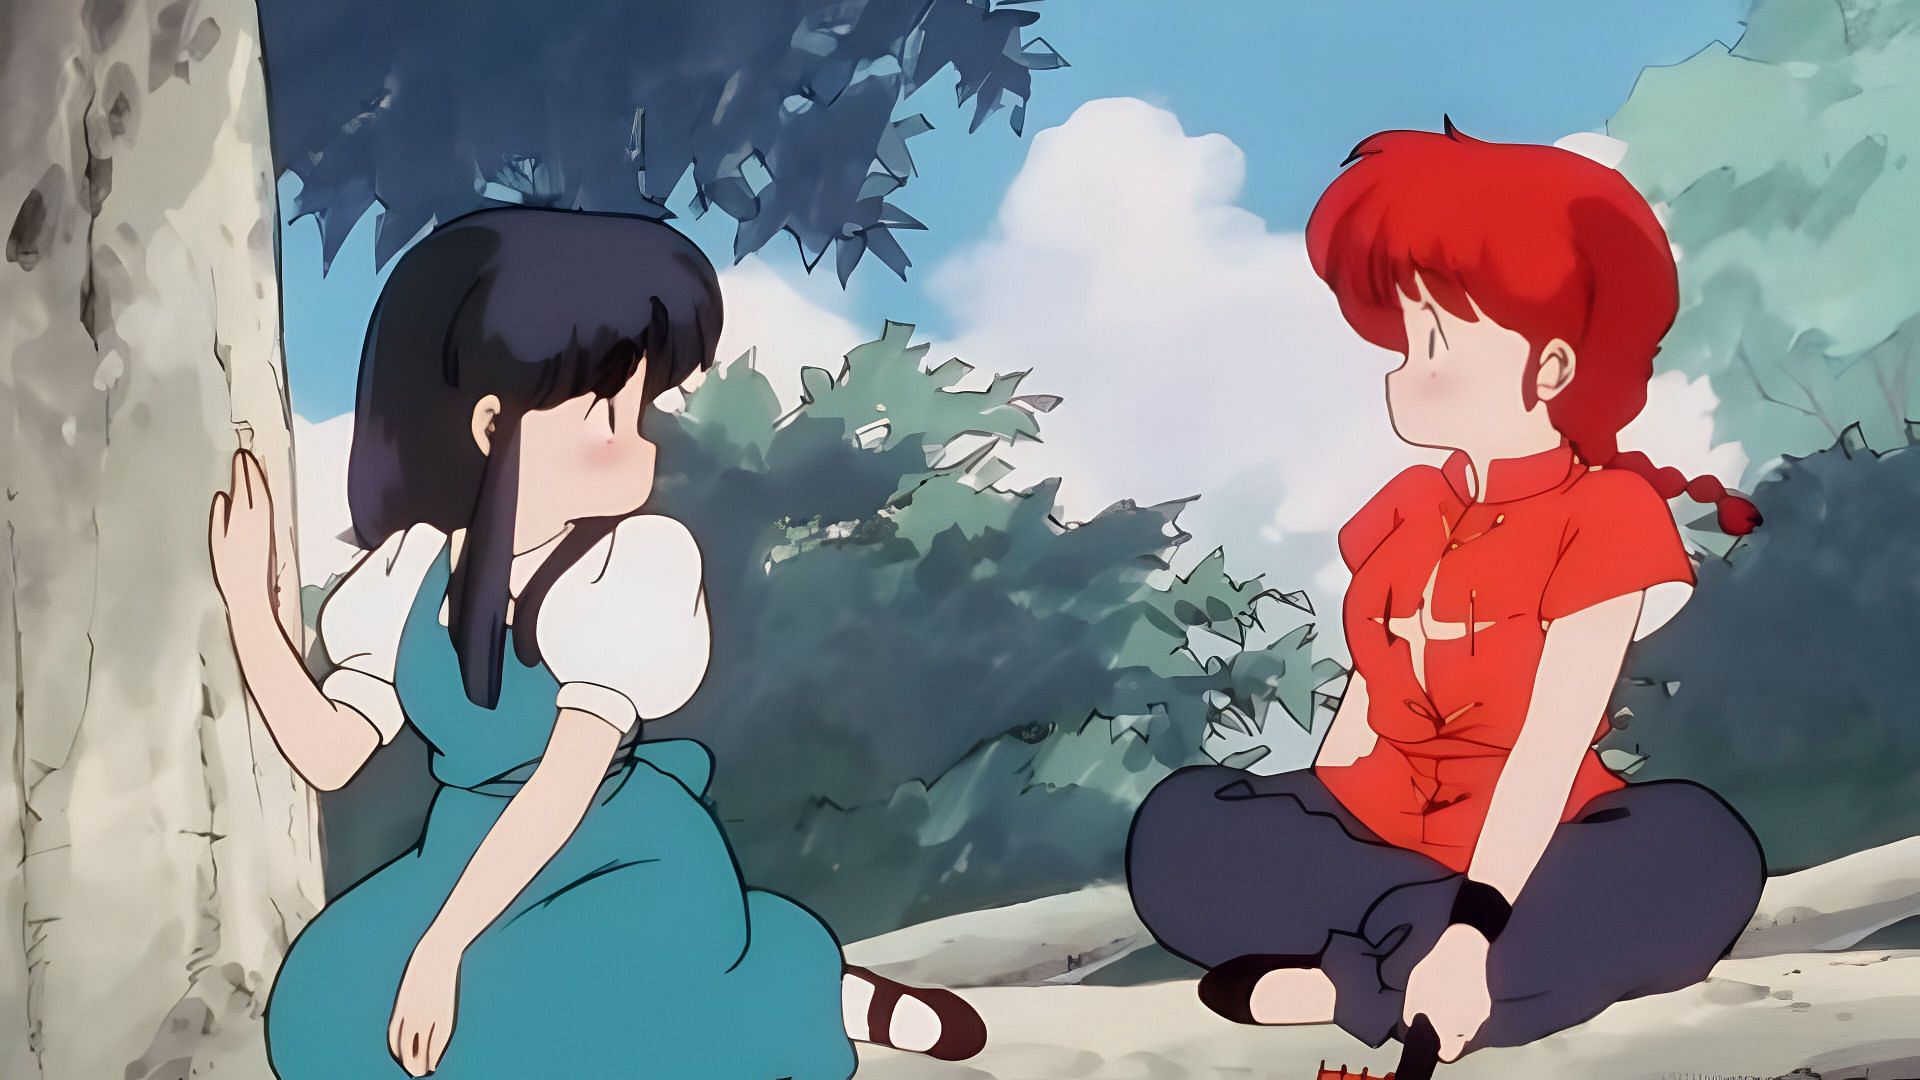 Ranma and Akane, as seen in the anime (Image via Studio DEEN)